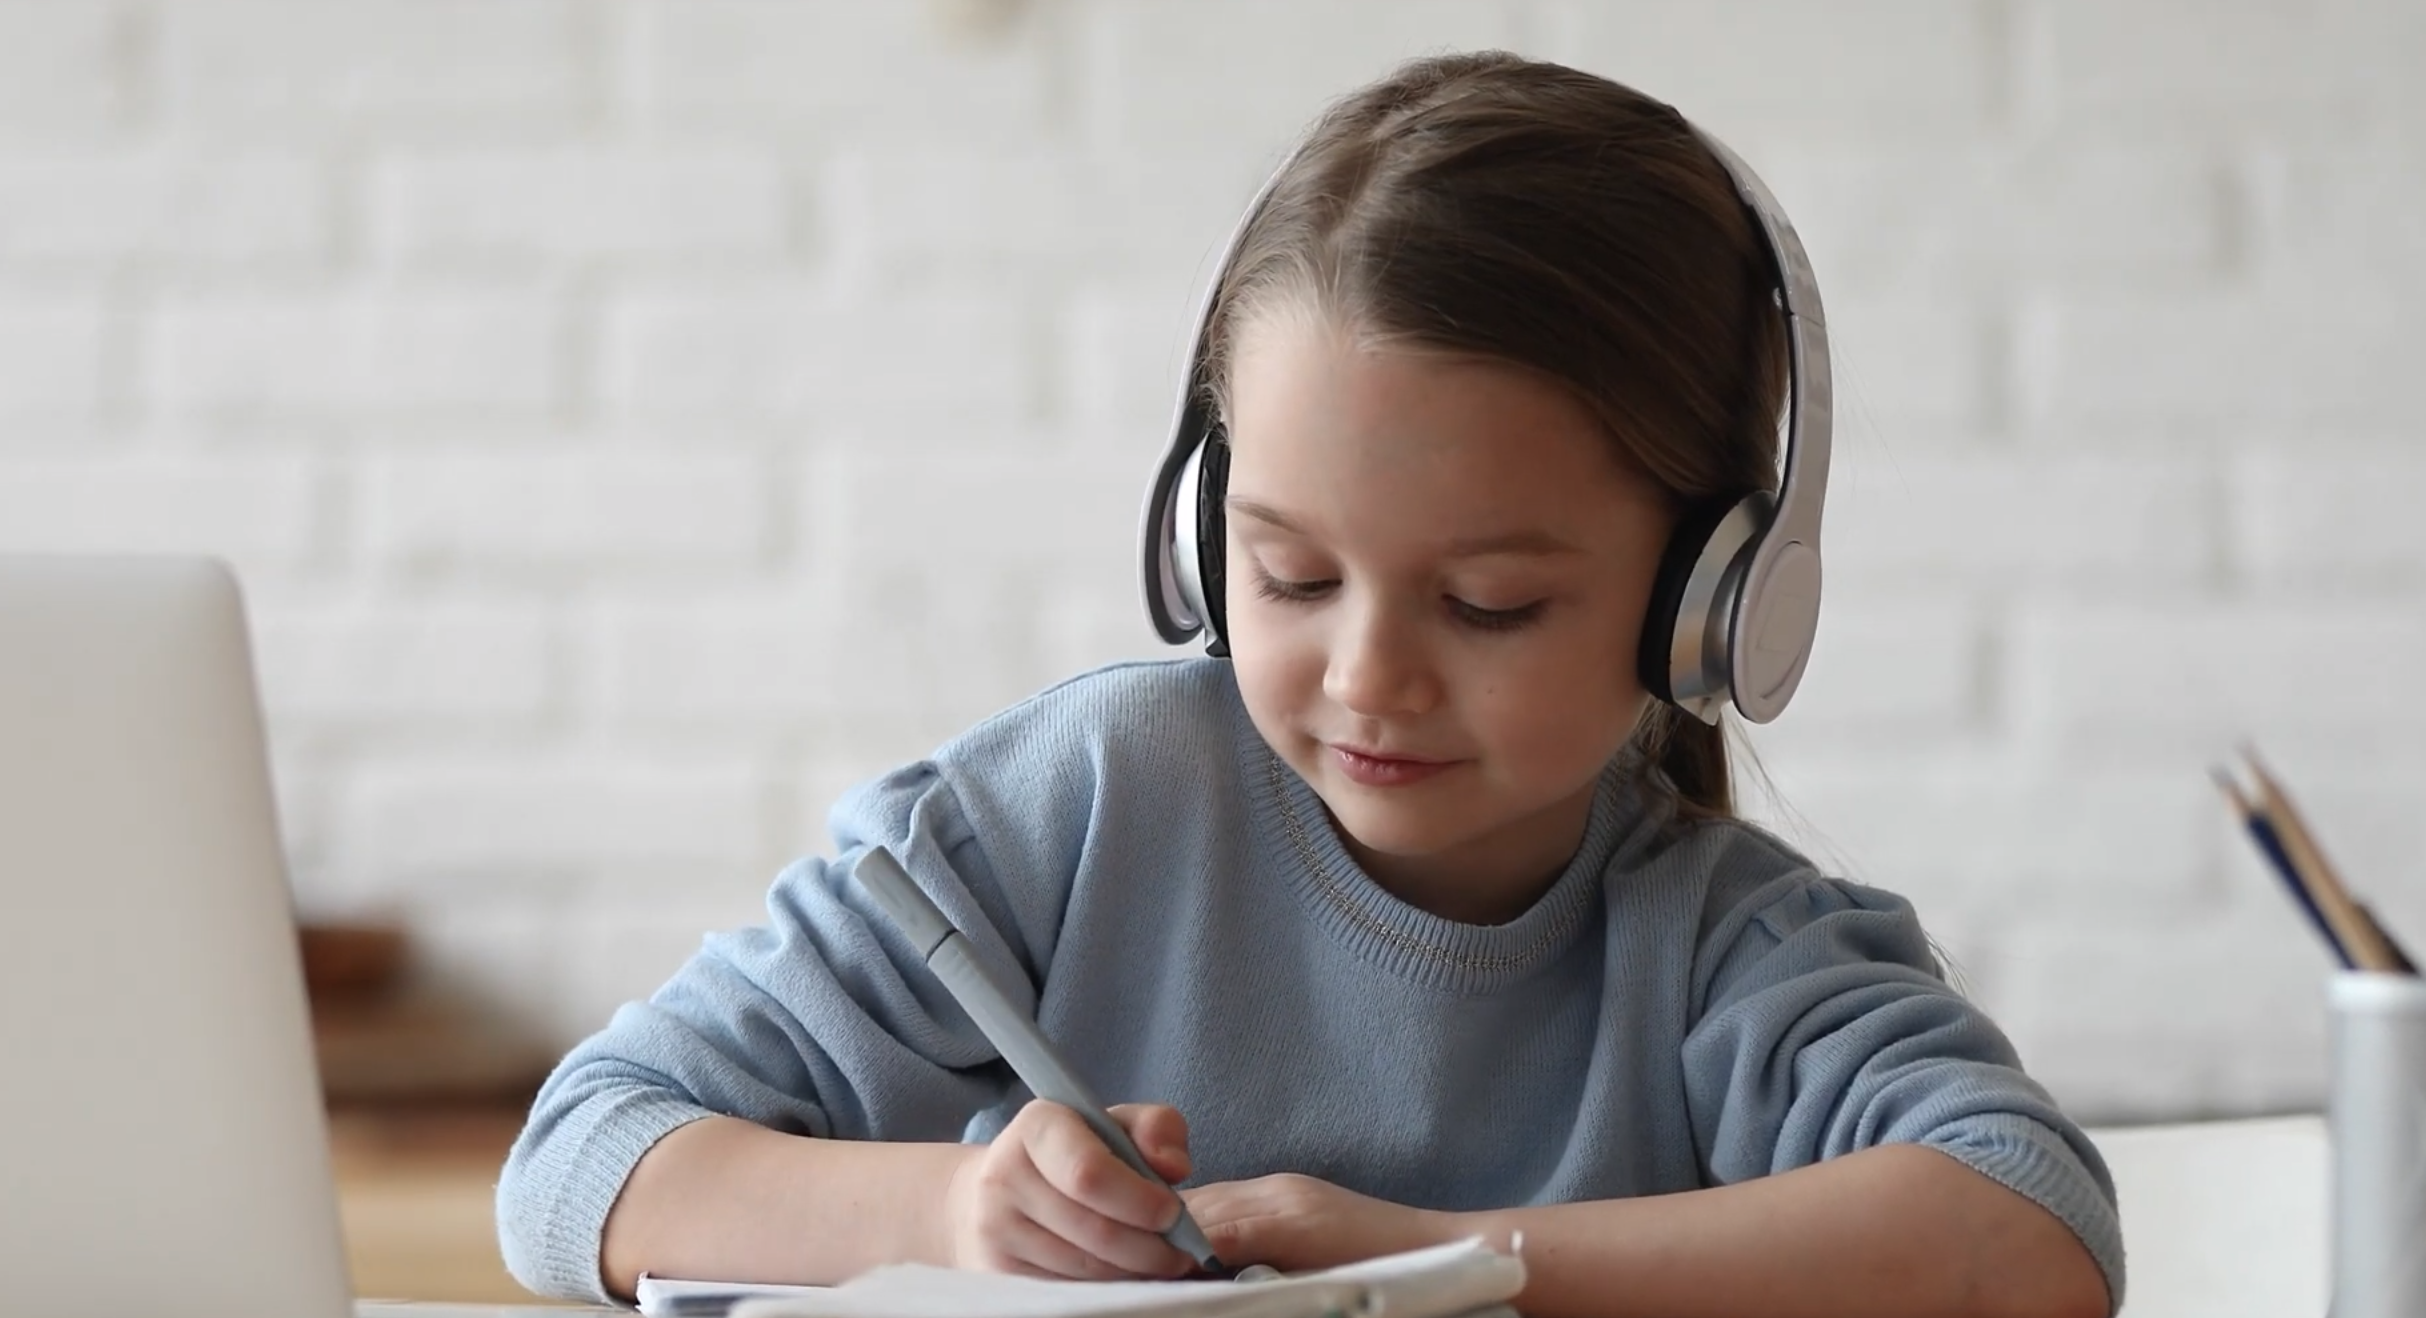 kid doing homework with headphones on